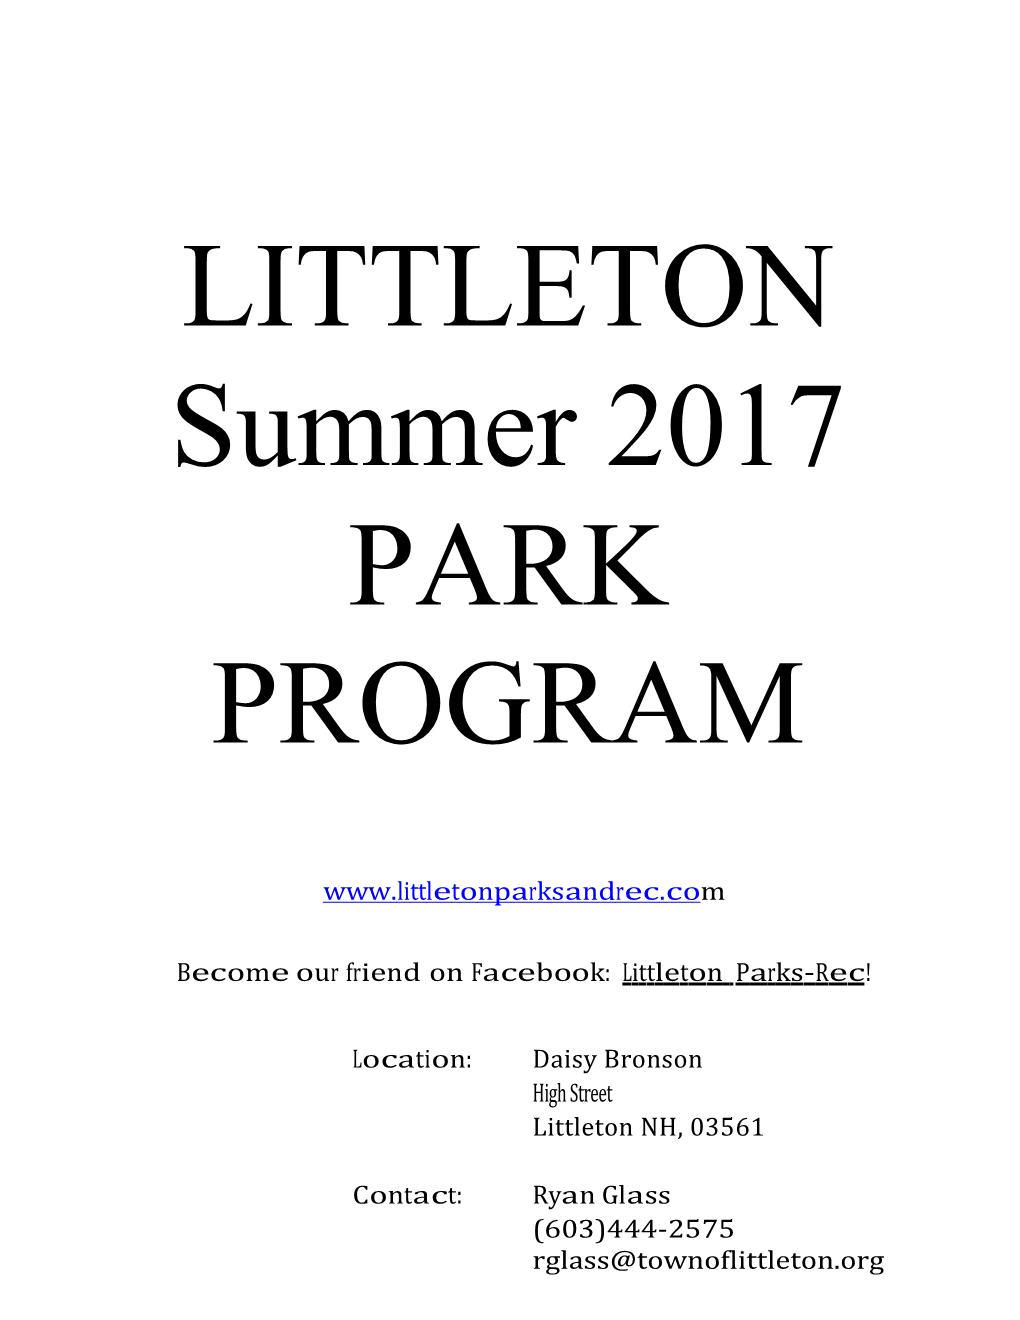 Become Our Friend on Facebook: Littleton Parks-Rec!